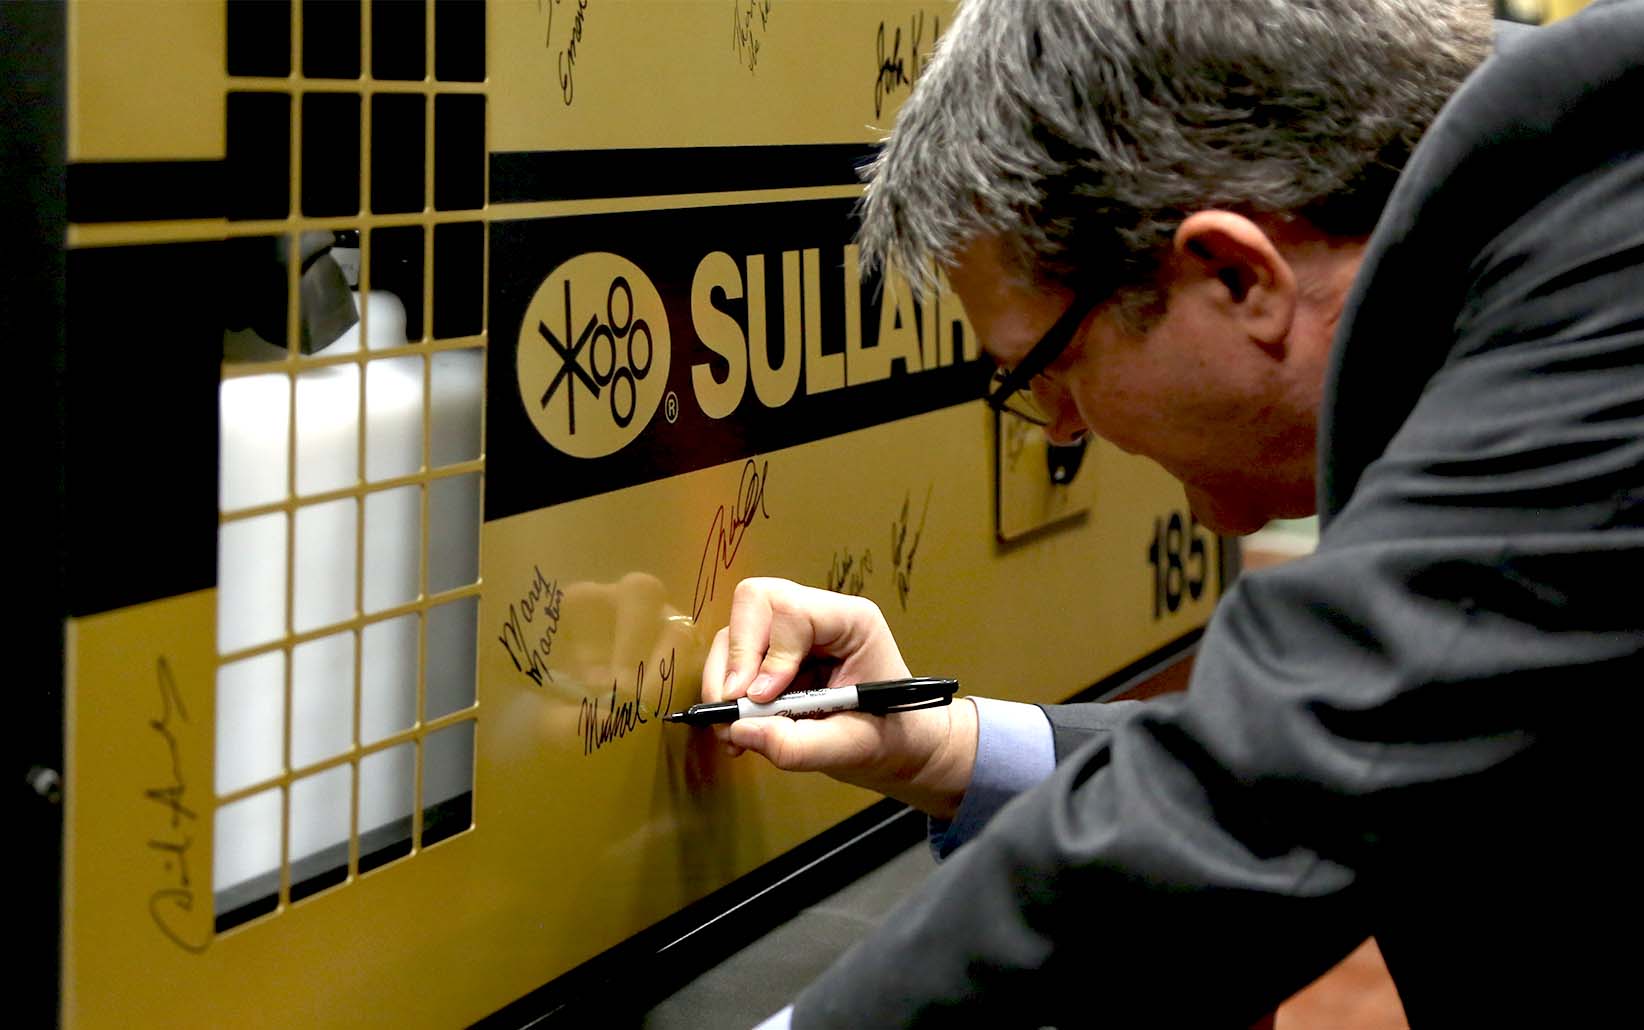 Sullair Heart of Gold Compressor Raises $18,000 for the ARA Foundation.